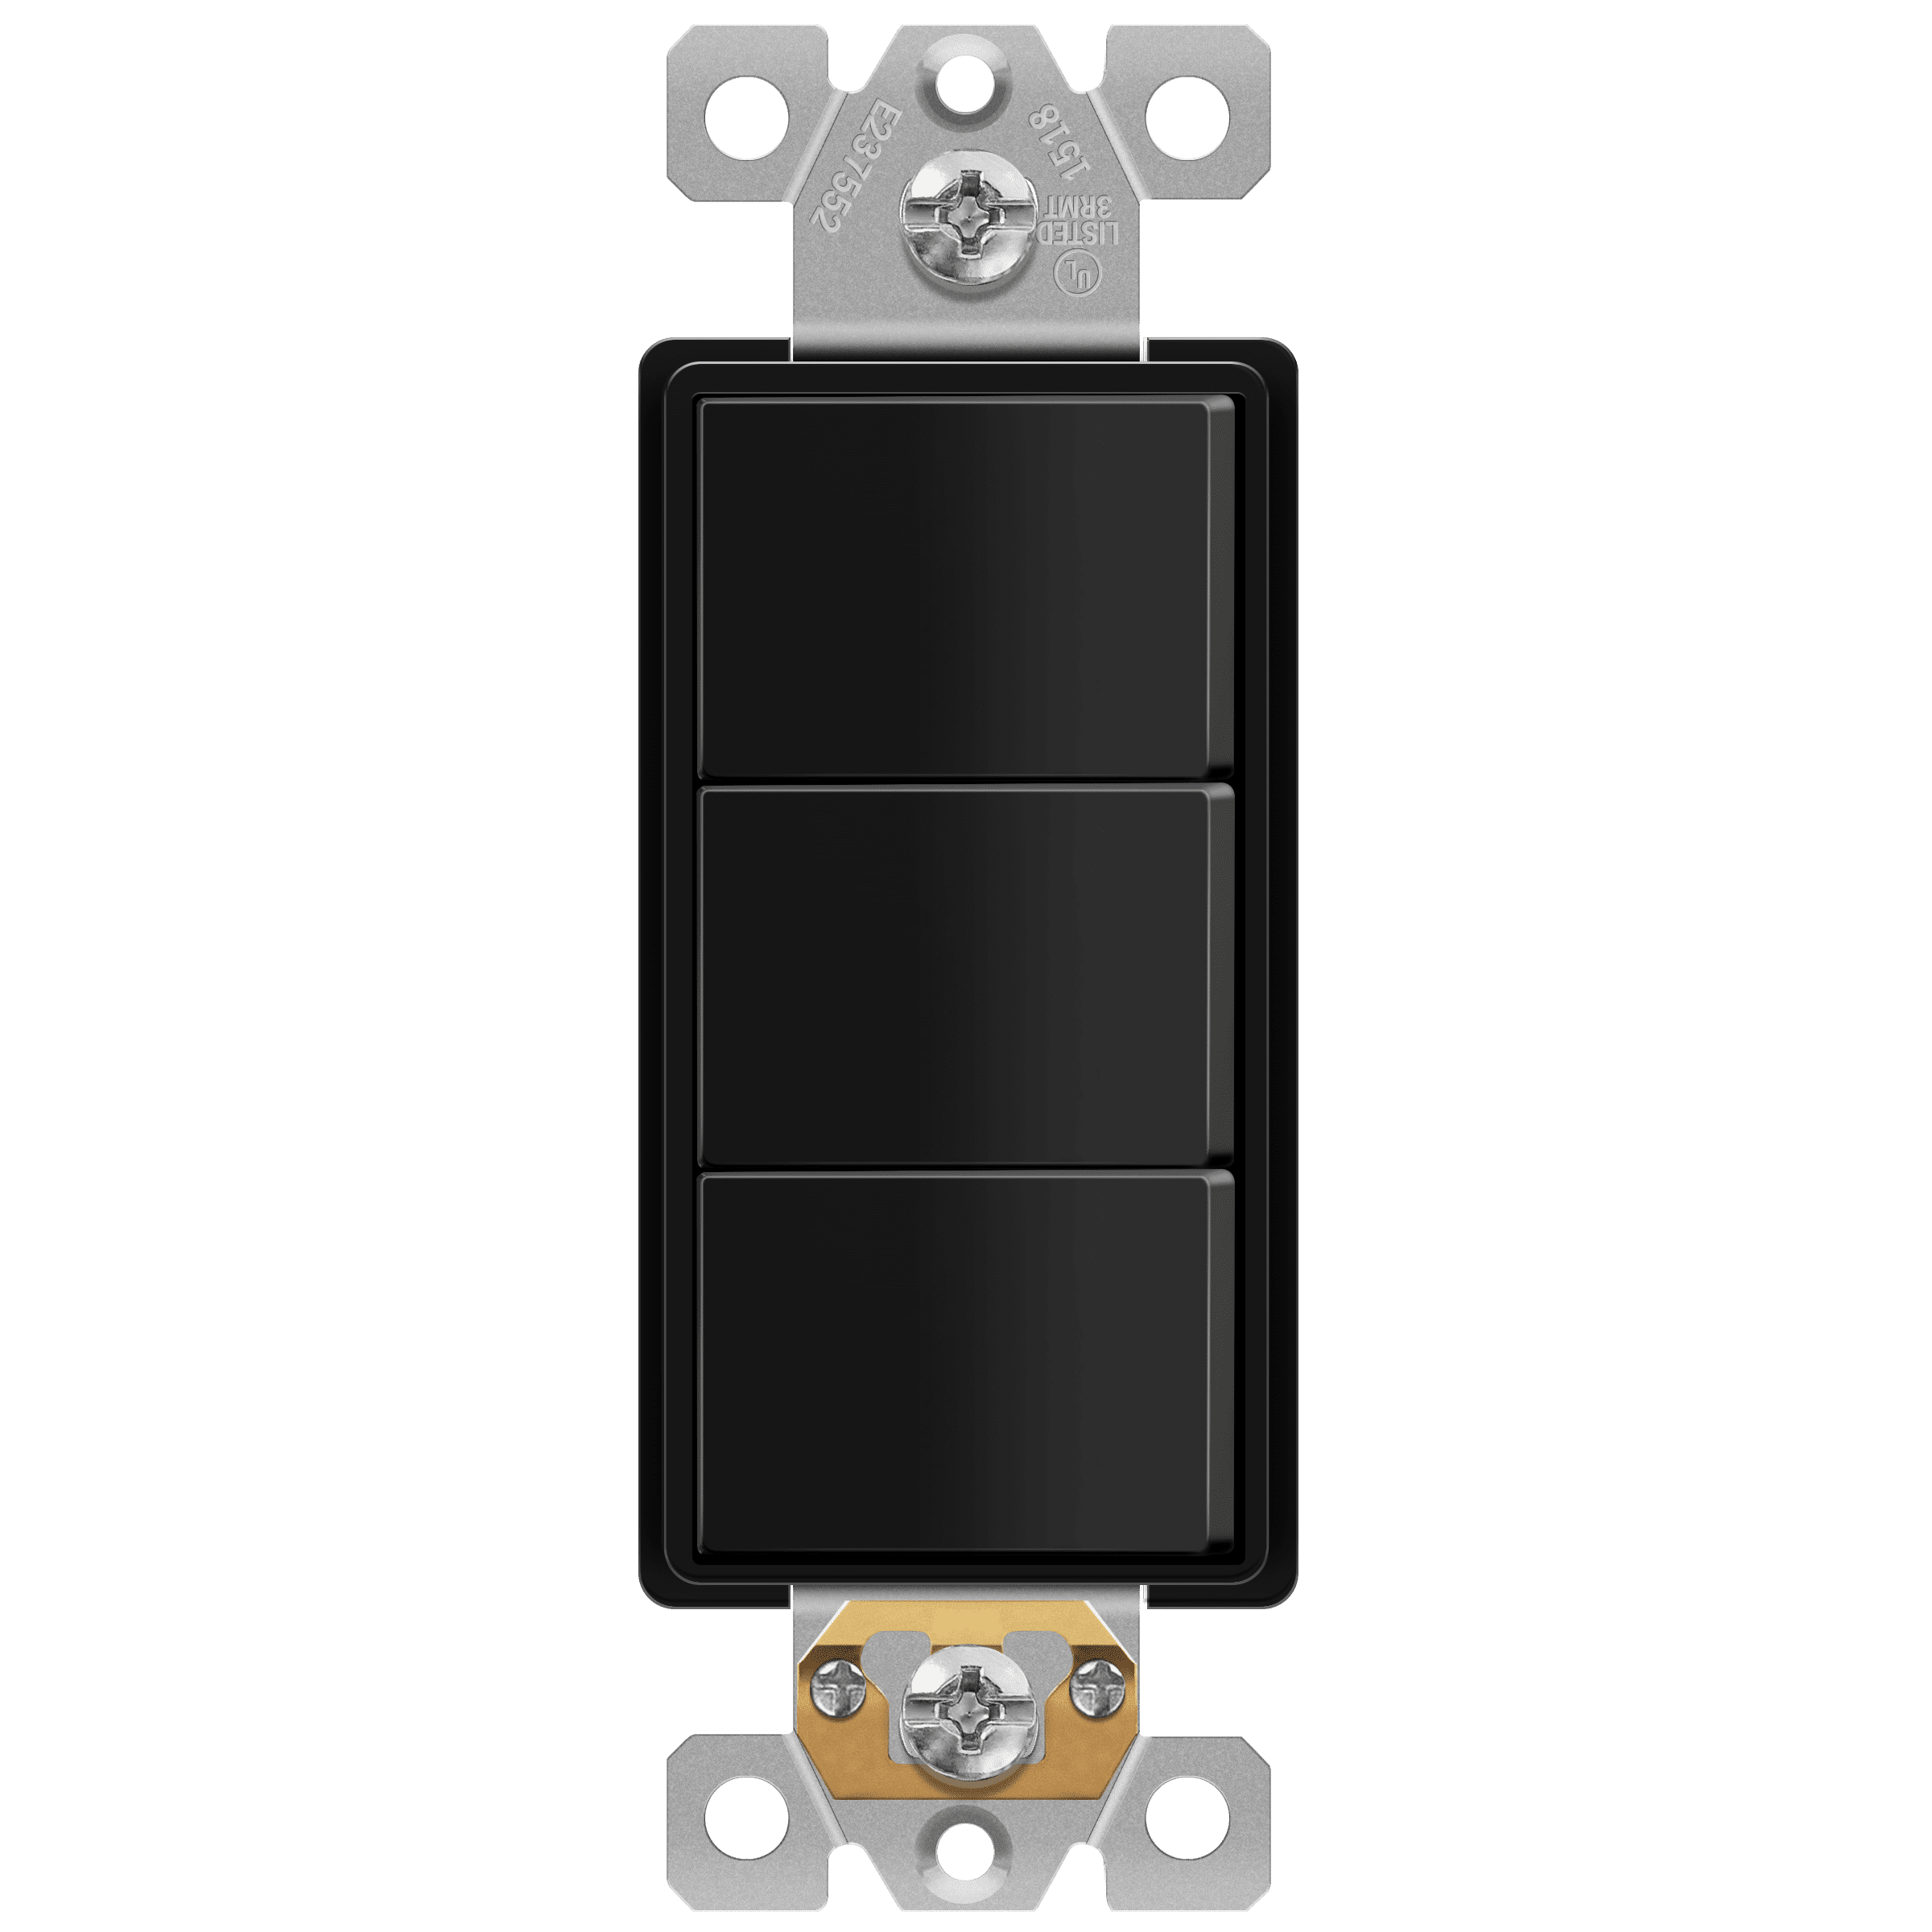 Enerlites Triple Paddle Rocker Combination Decorator Switch Gloss